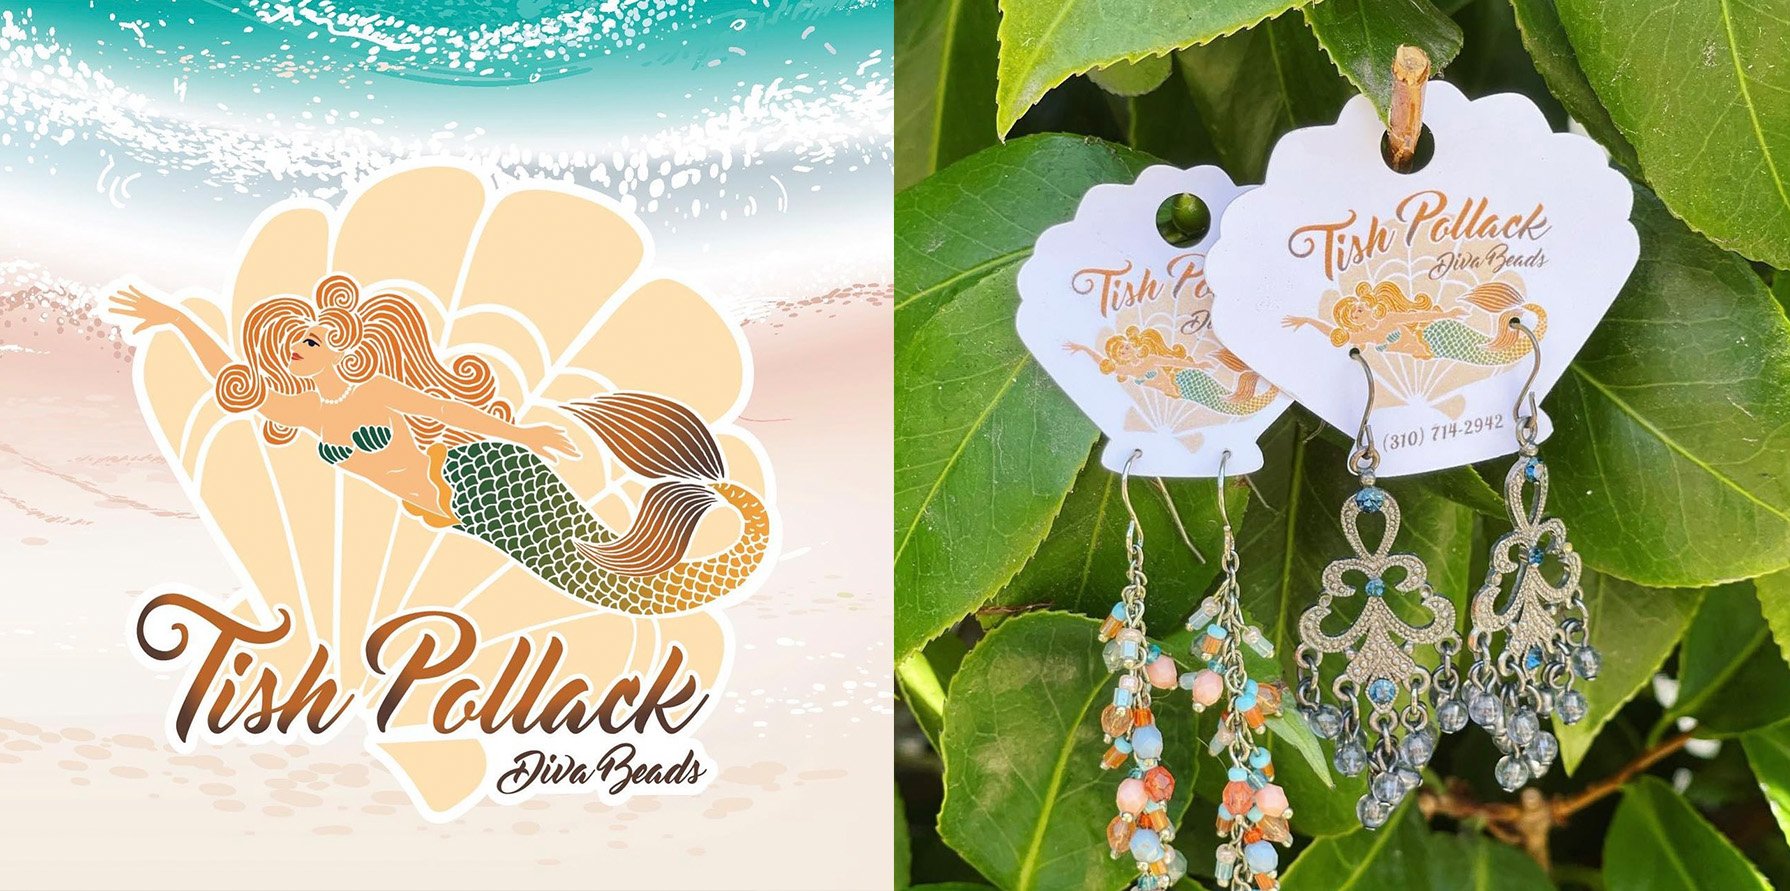 Tish-Pollack-diva-beads-logo-photo.jpg